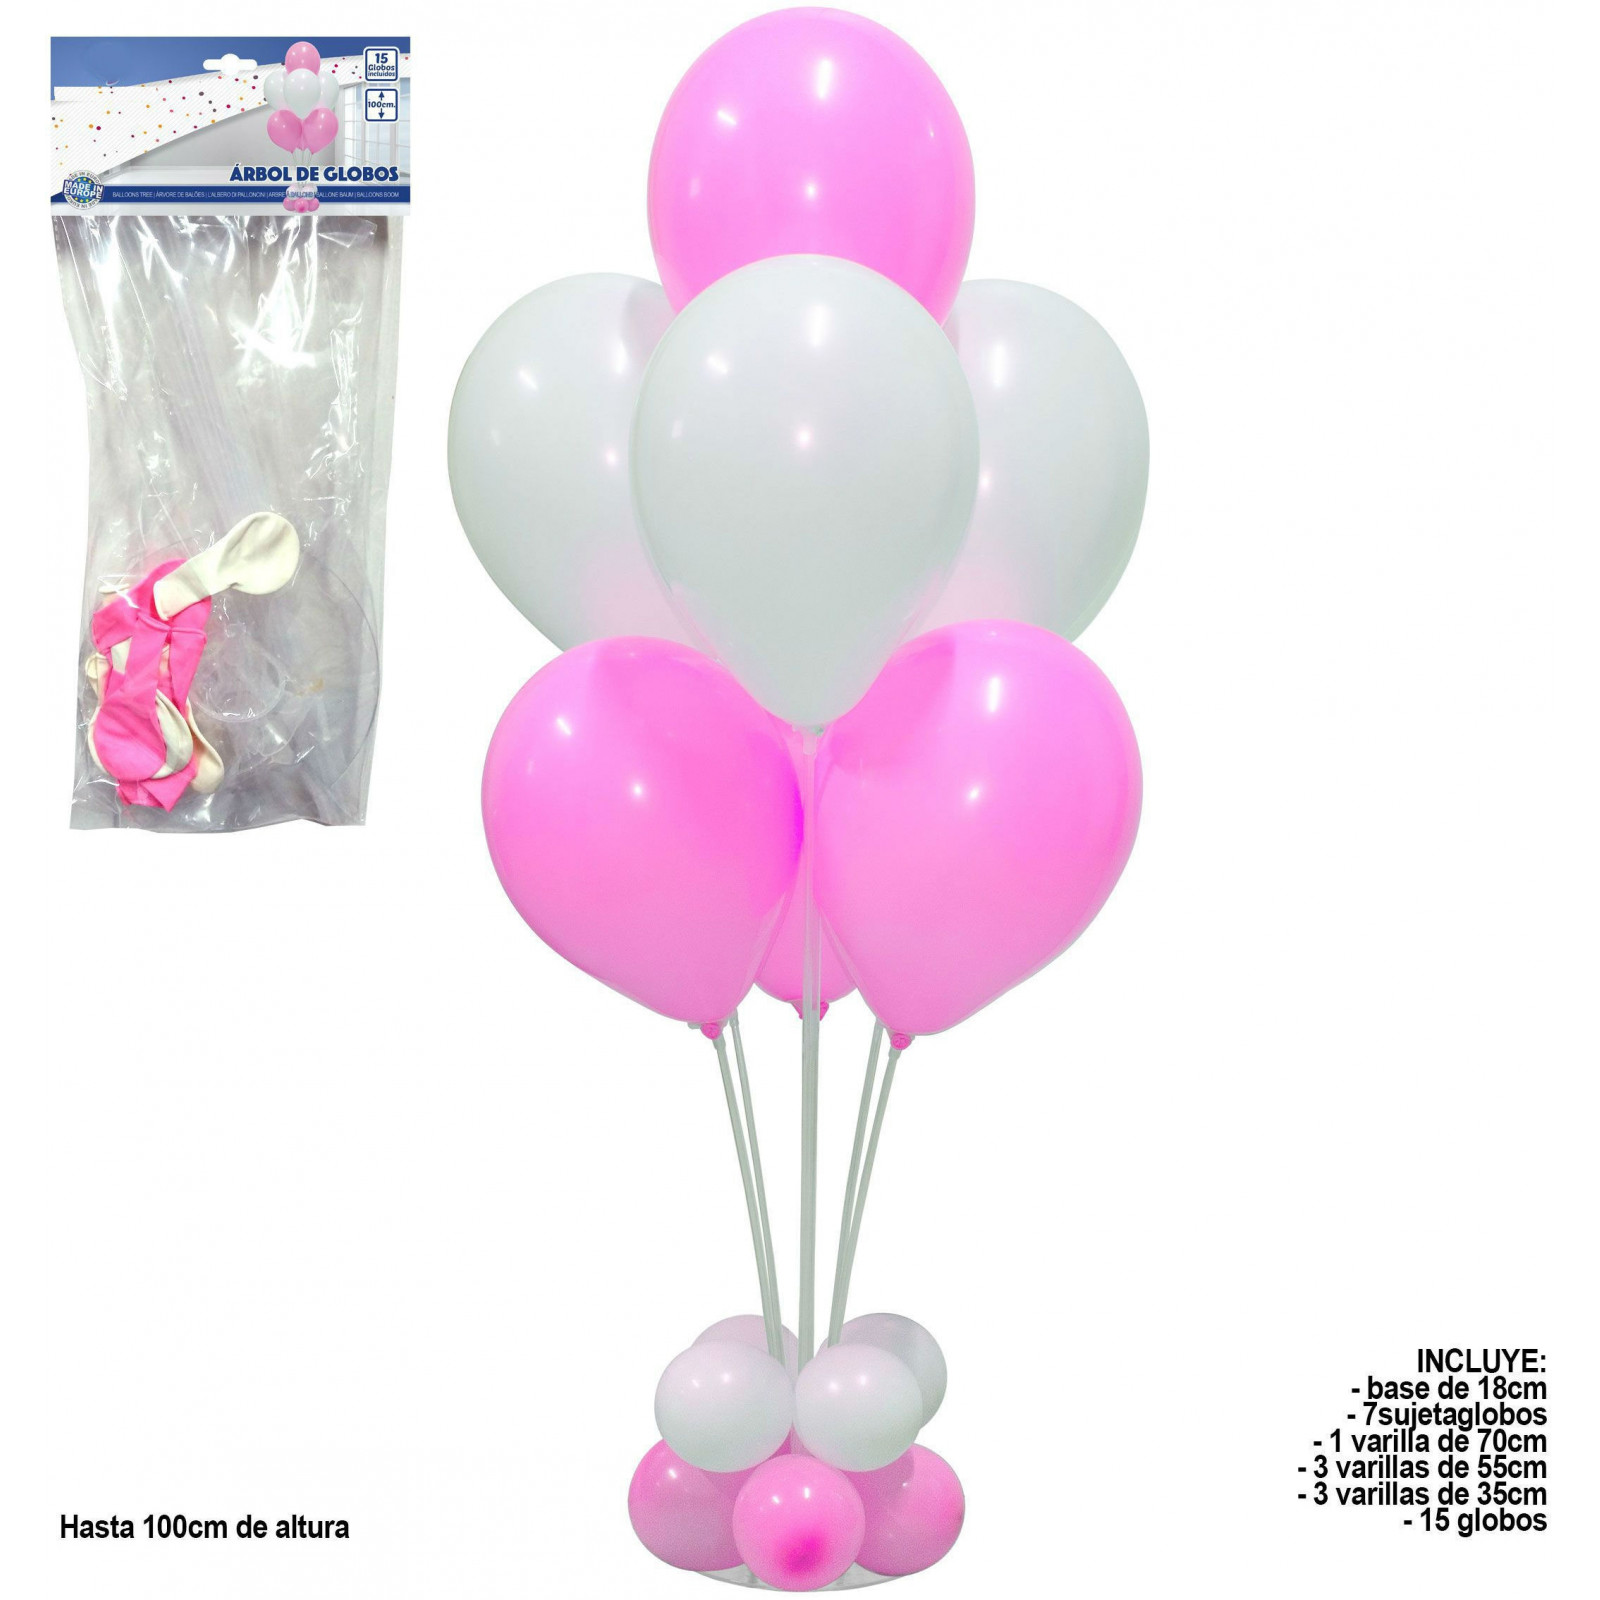 Soporte para decoración con globos